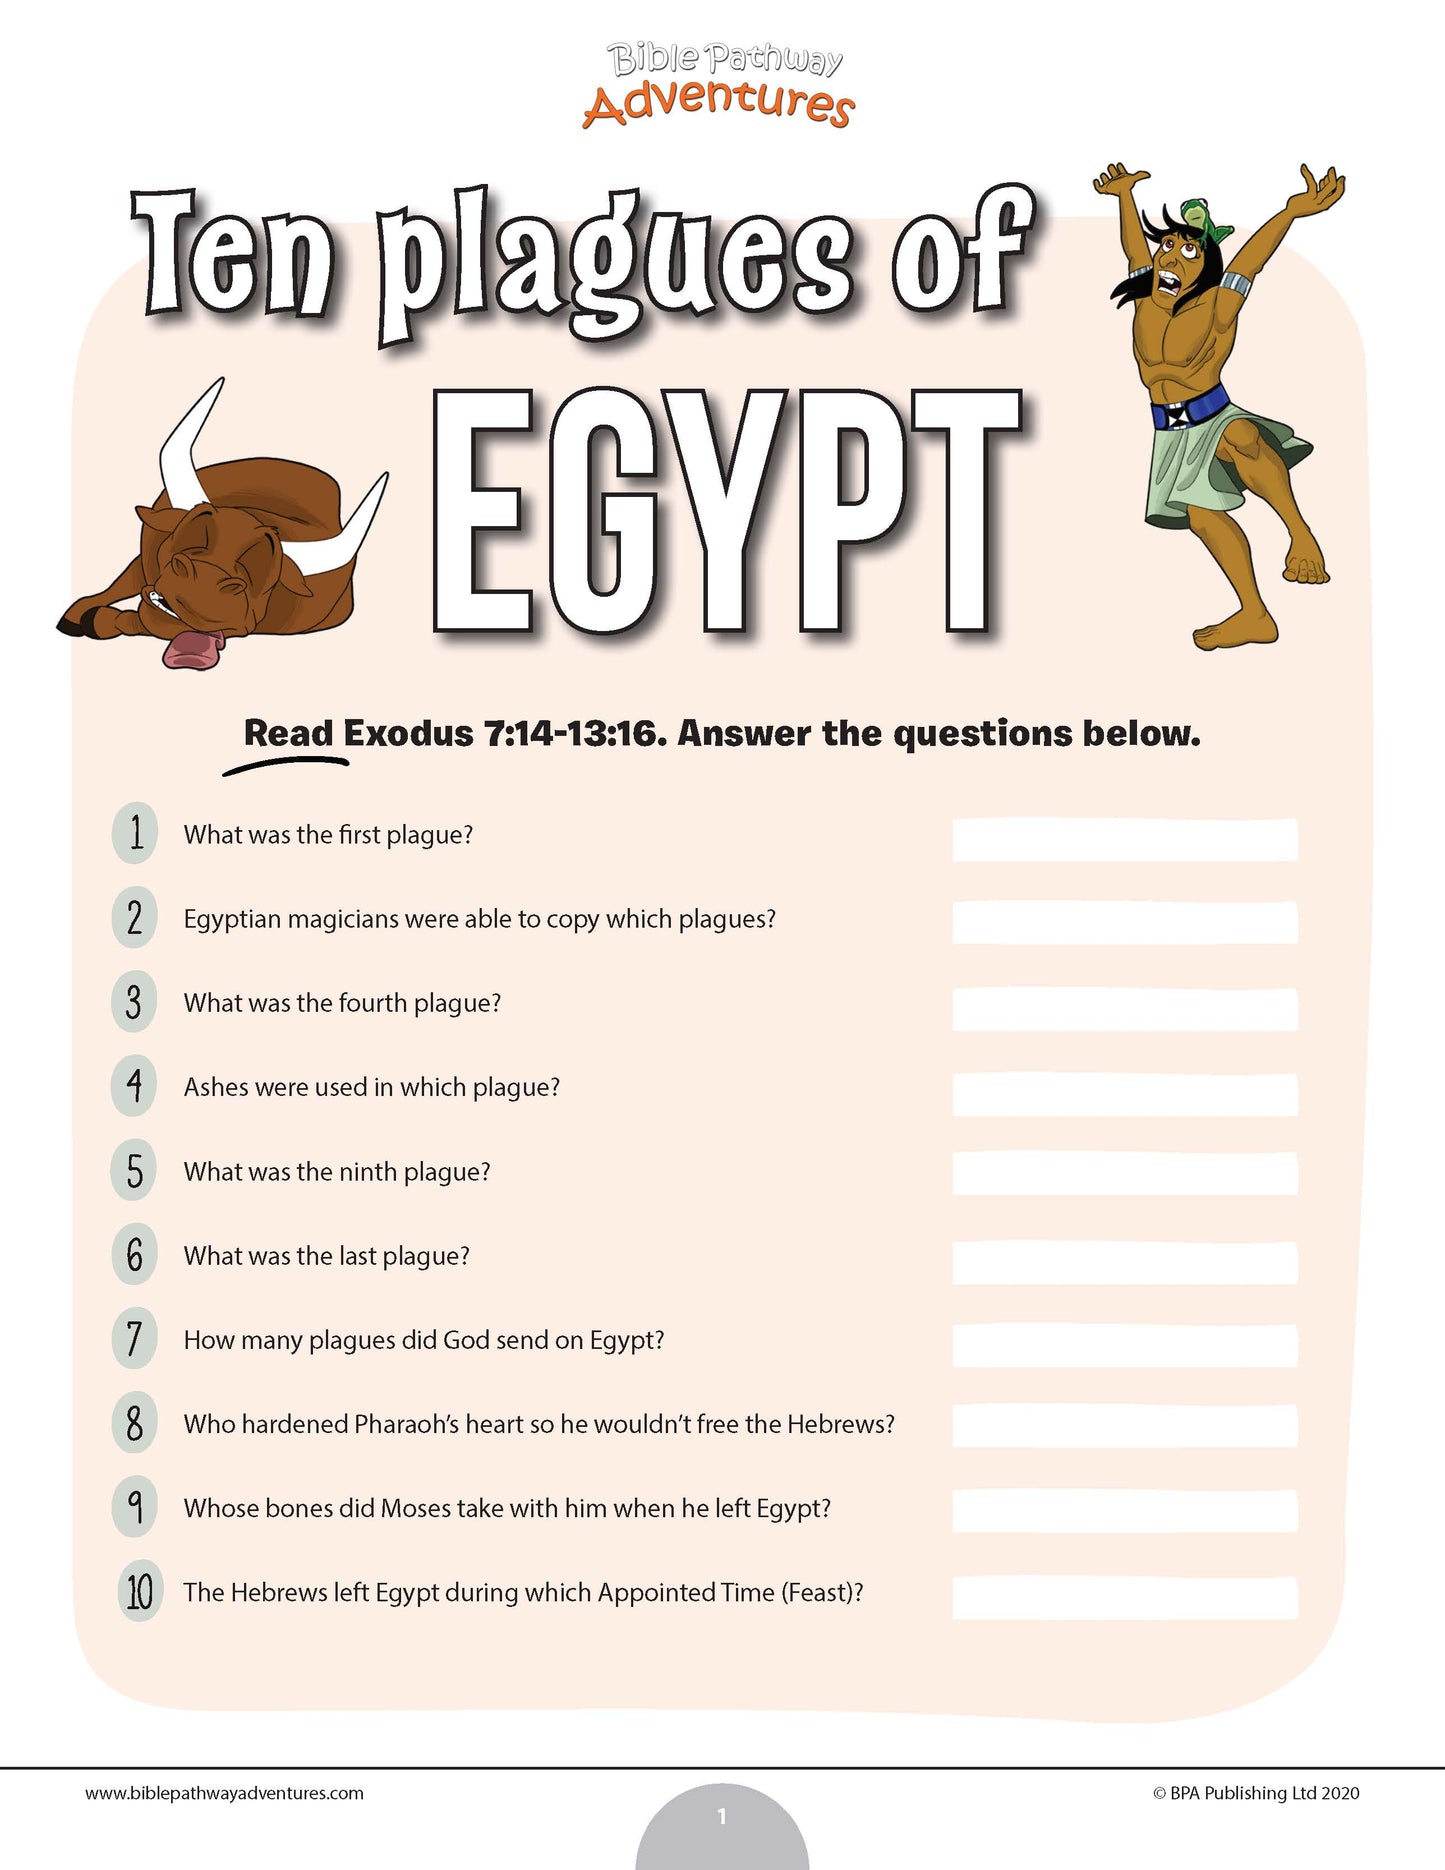 Ten Plagues of Egypt quiz